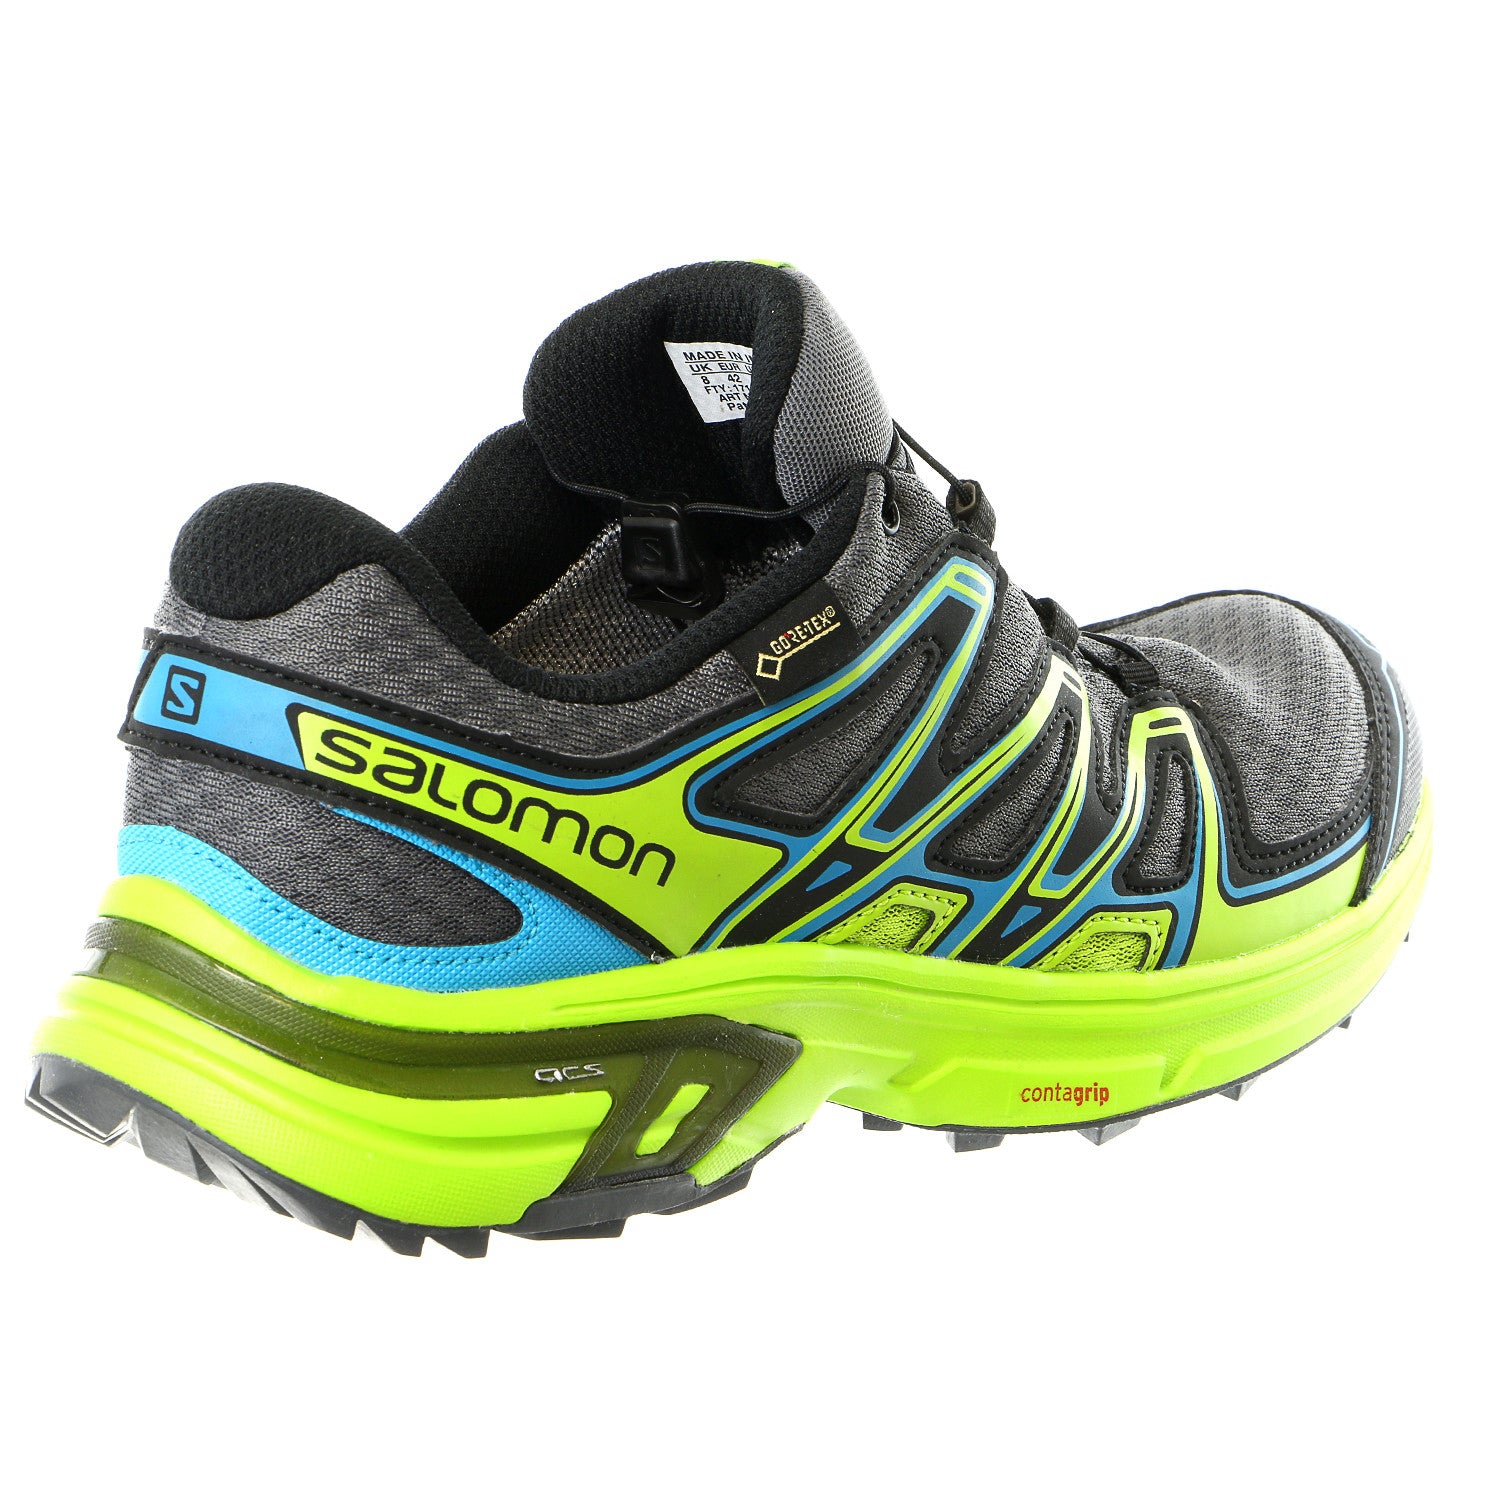 Salomon Speedcross 4 Gtx Trail Runner - Men's - Shoplifestyle